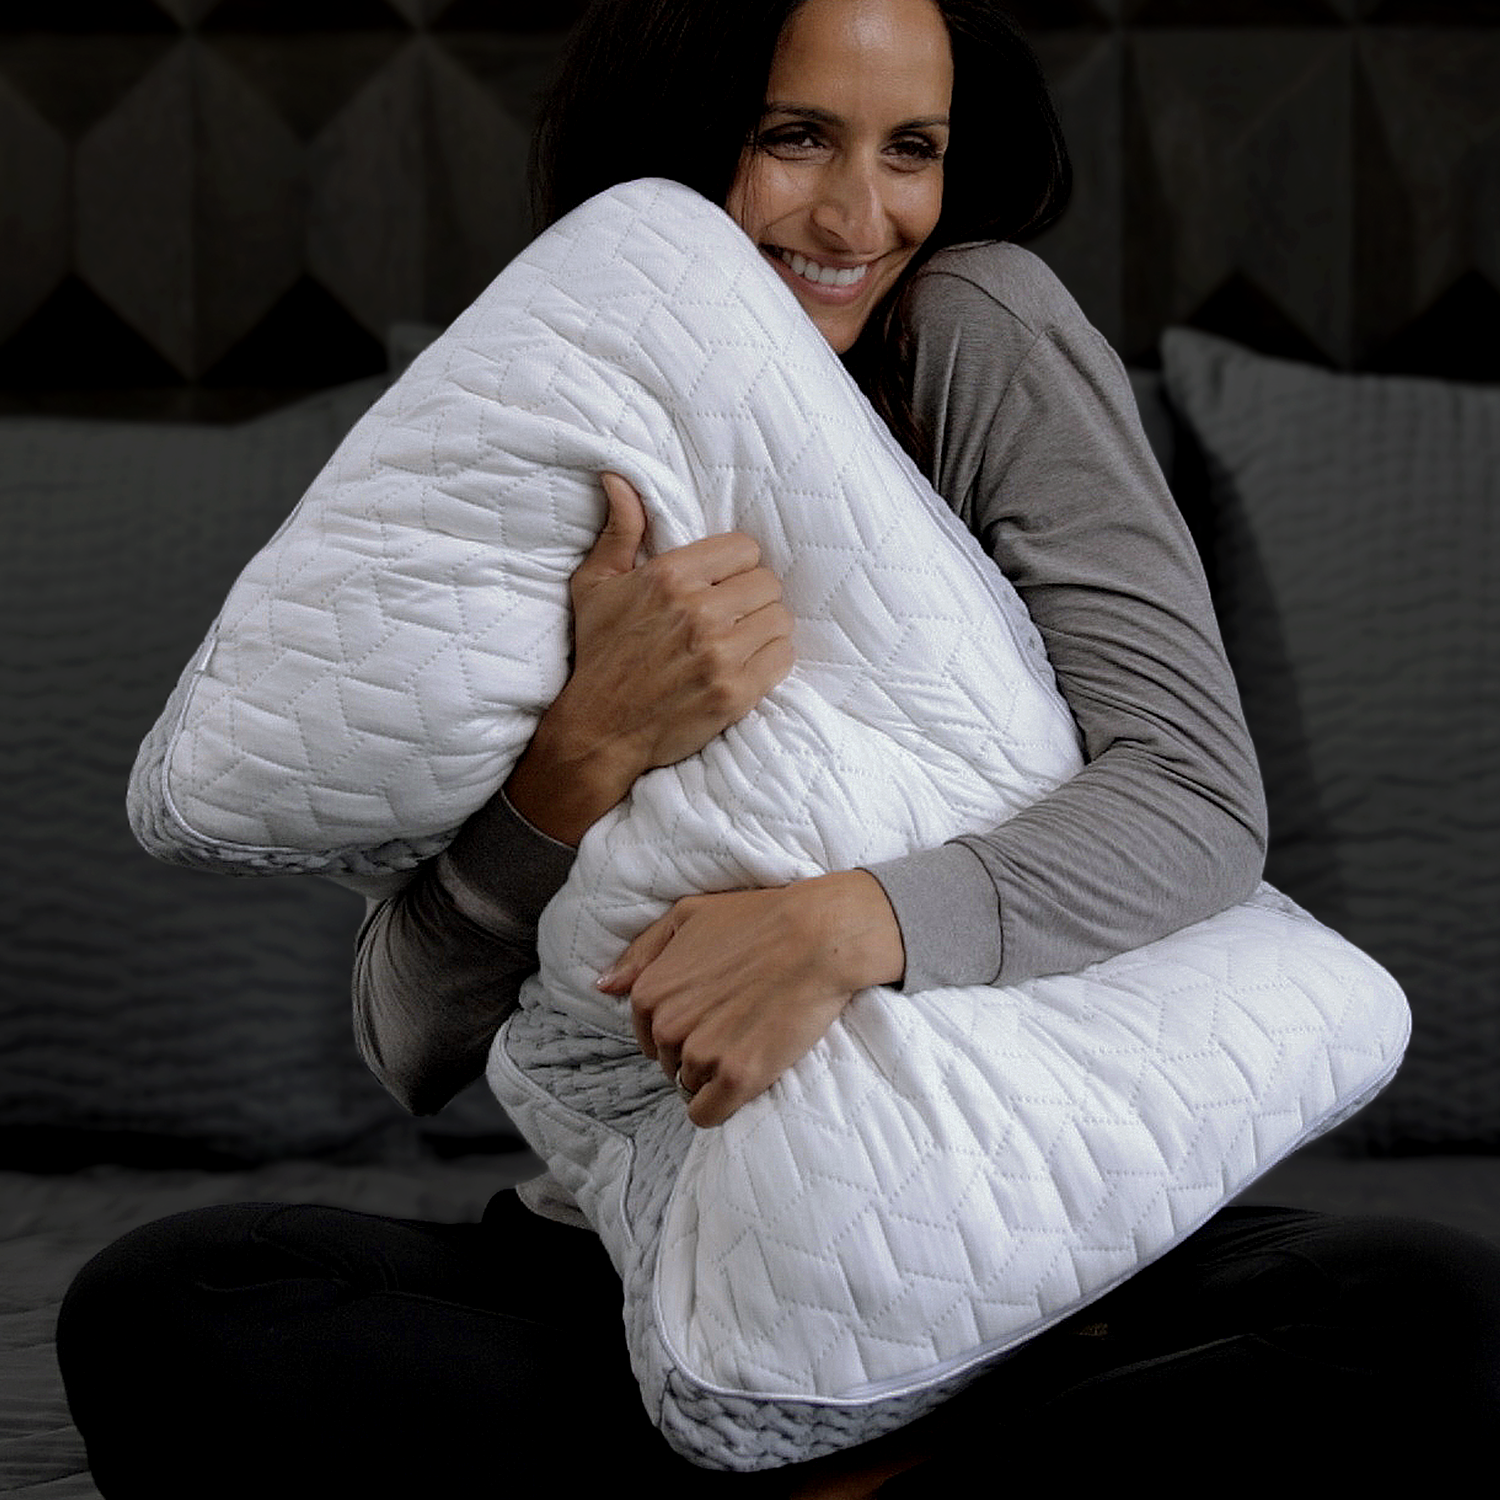 Dr. Pillow Cooling Thigh Pillow